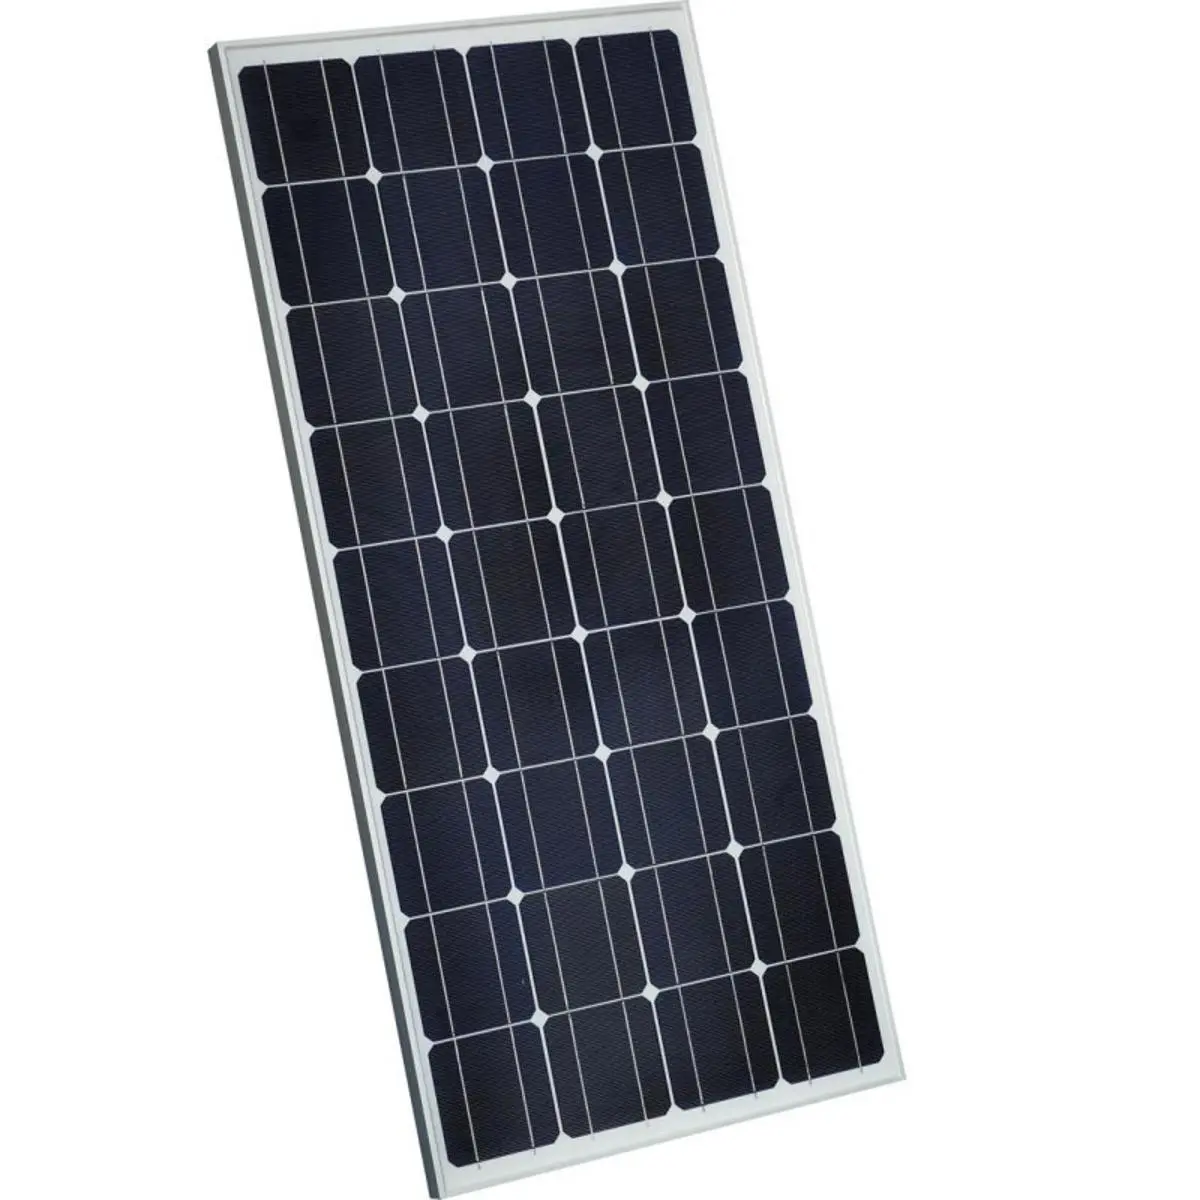 170 watt solar panel price in pakistan - What is the price of 170 watt solar panel in Lahore